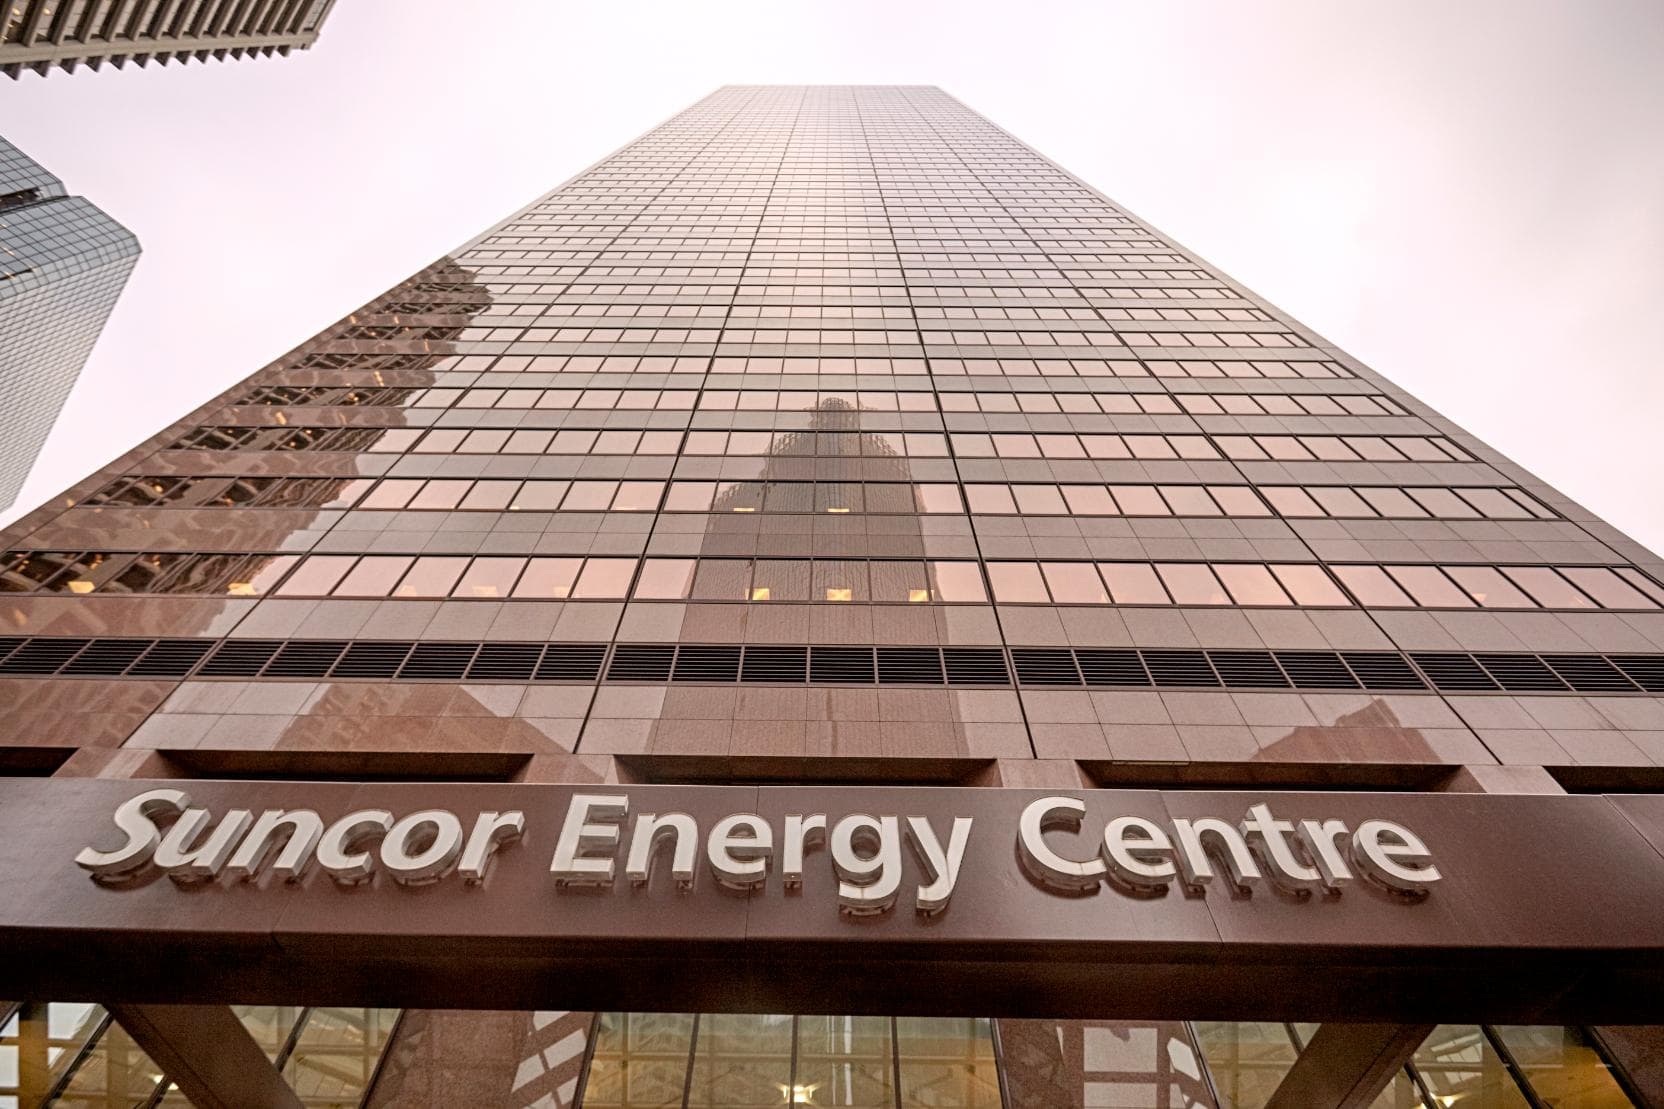 The front of Suncor Energy Centre in Calgary, Alberta